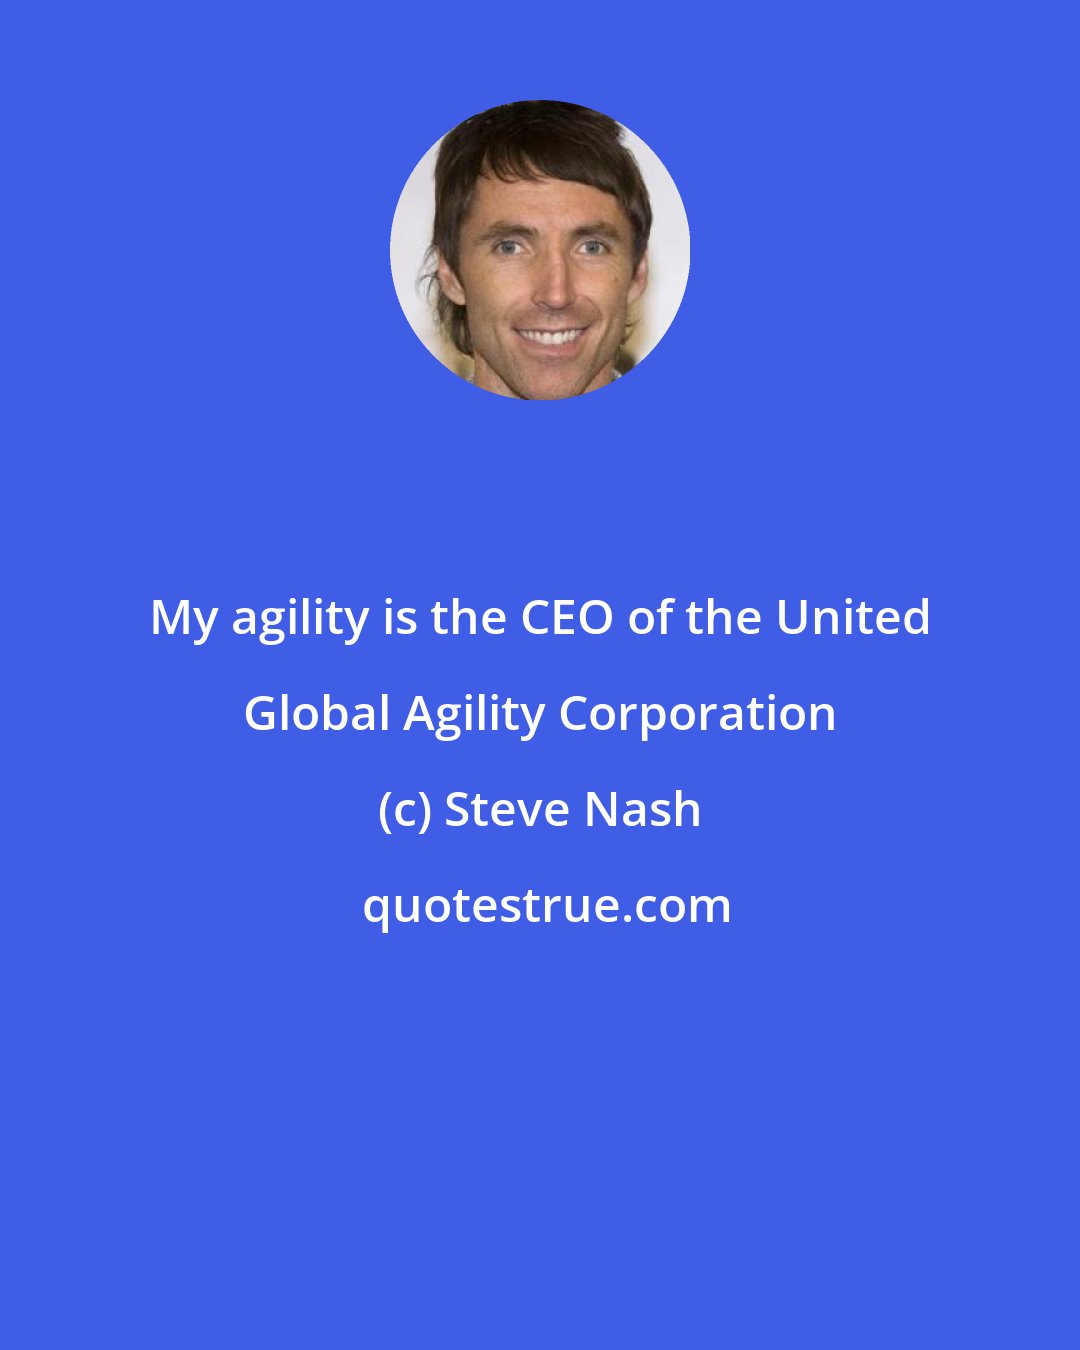 Steve Nash: My agility is the CEO of the United Global Agility Corporation